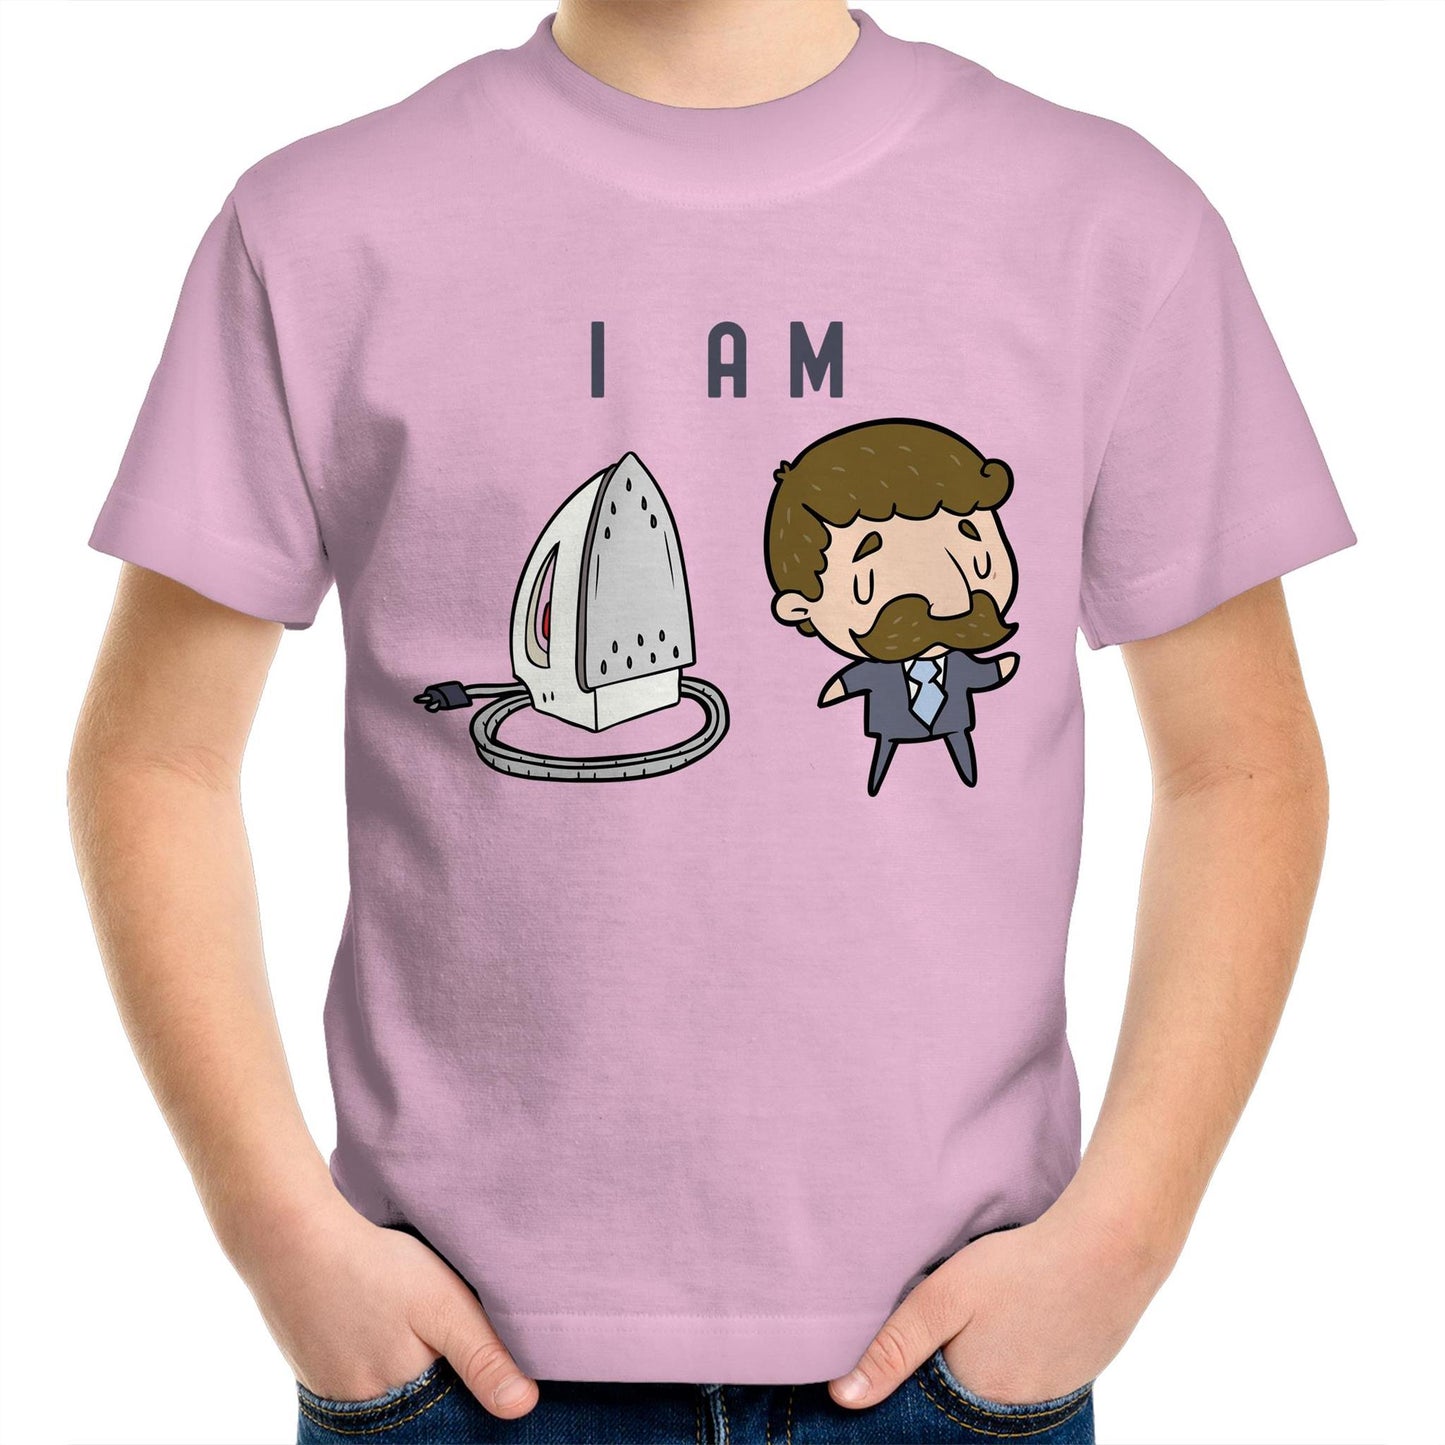 I Am Ironing Man Cartoon - Kids Youth Crew T-Shirt Pink Kids Youth T-shirt comic Funny